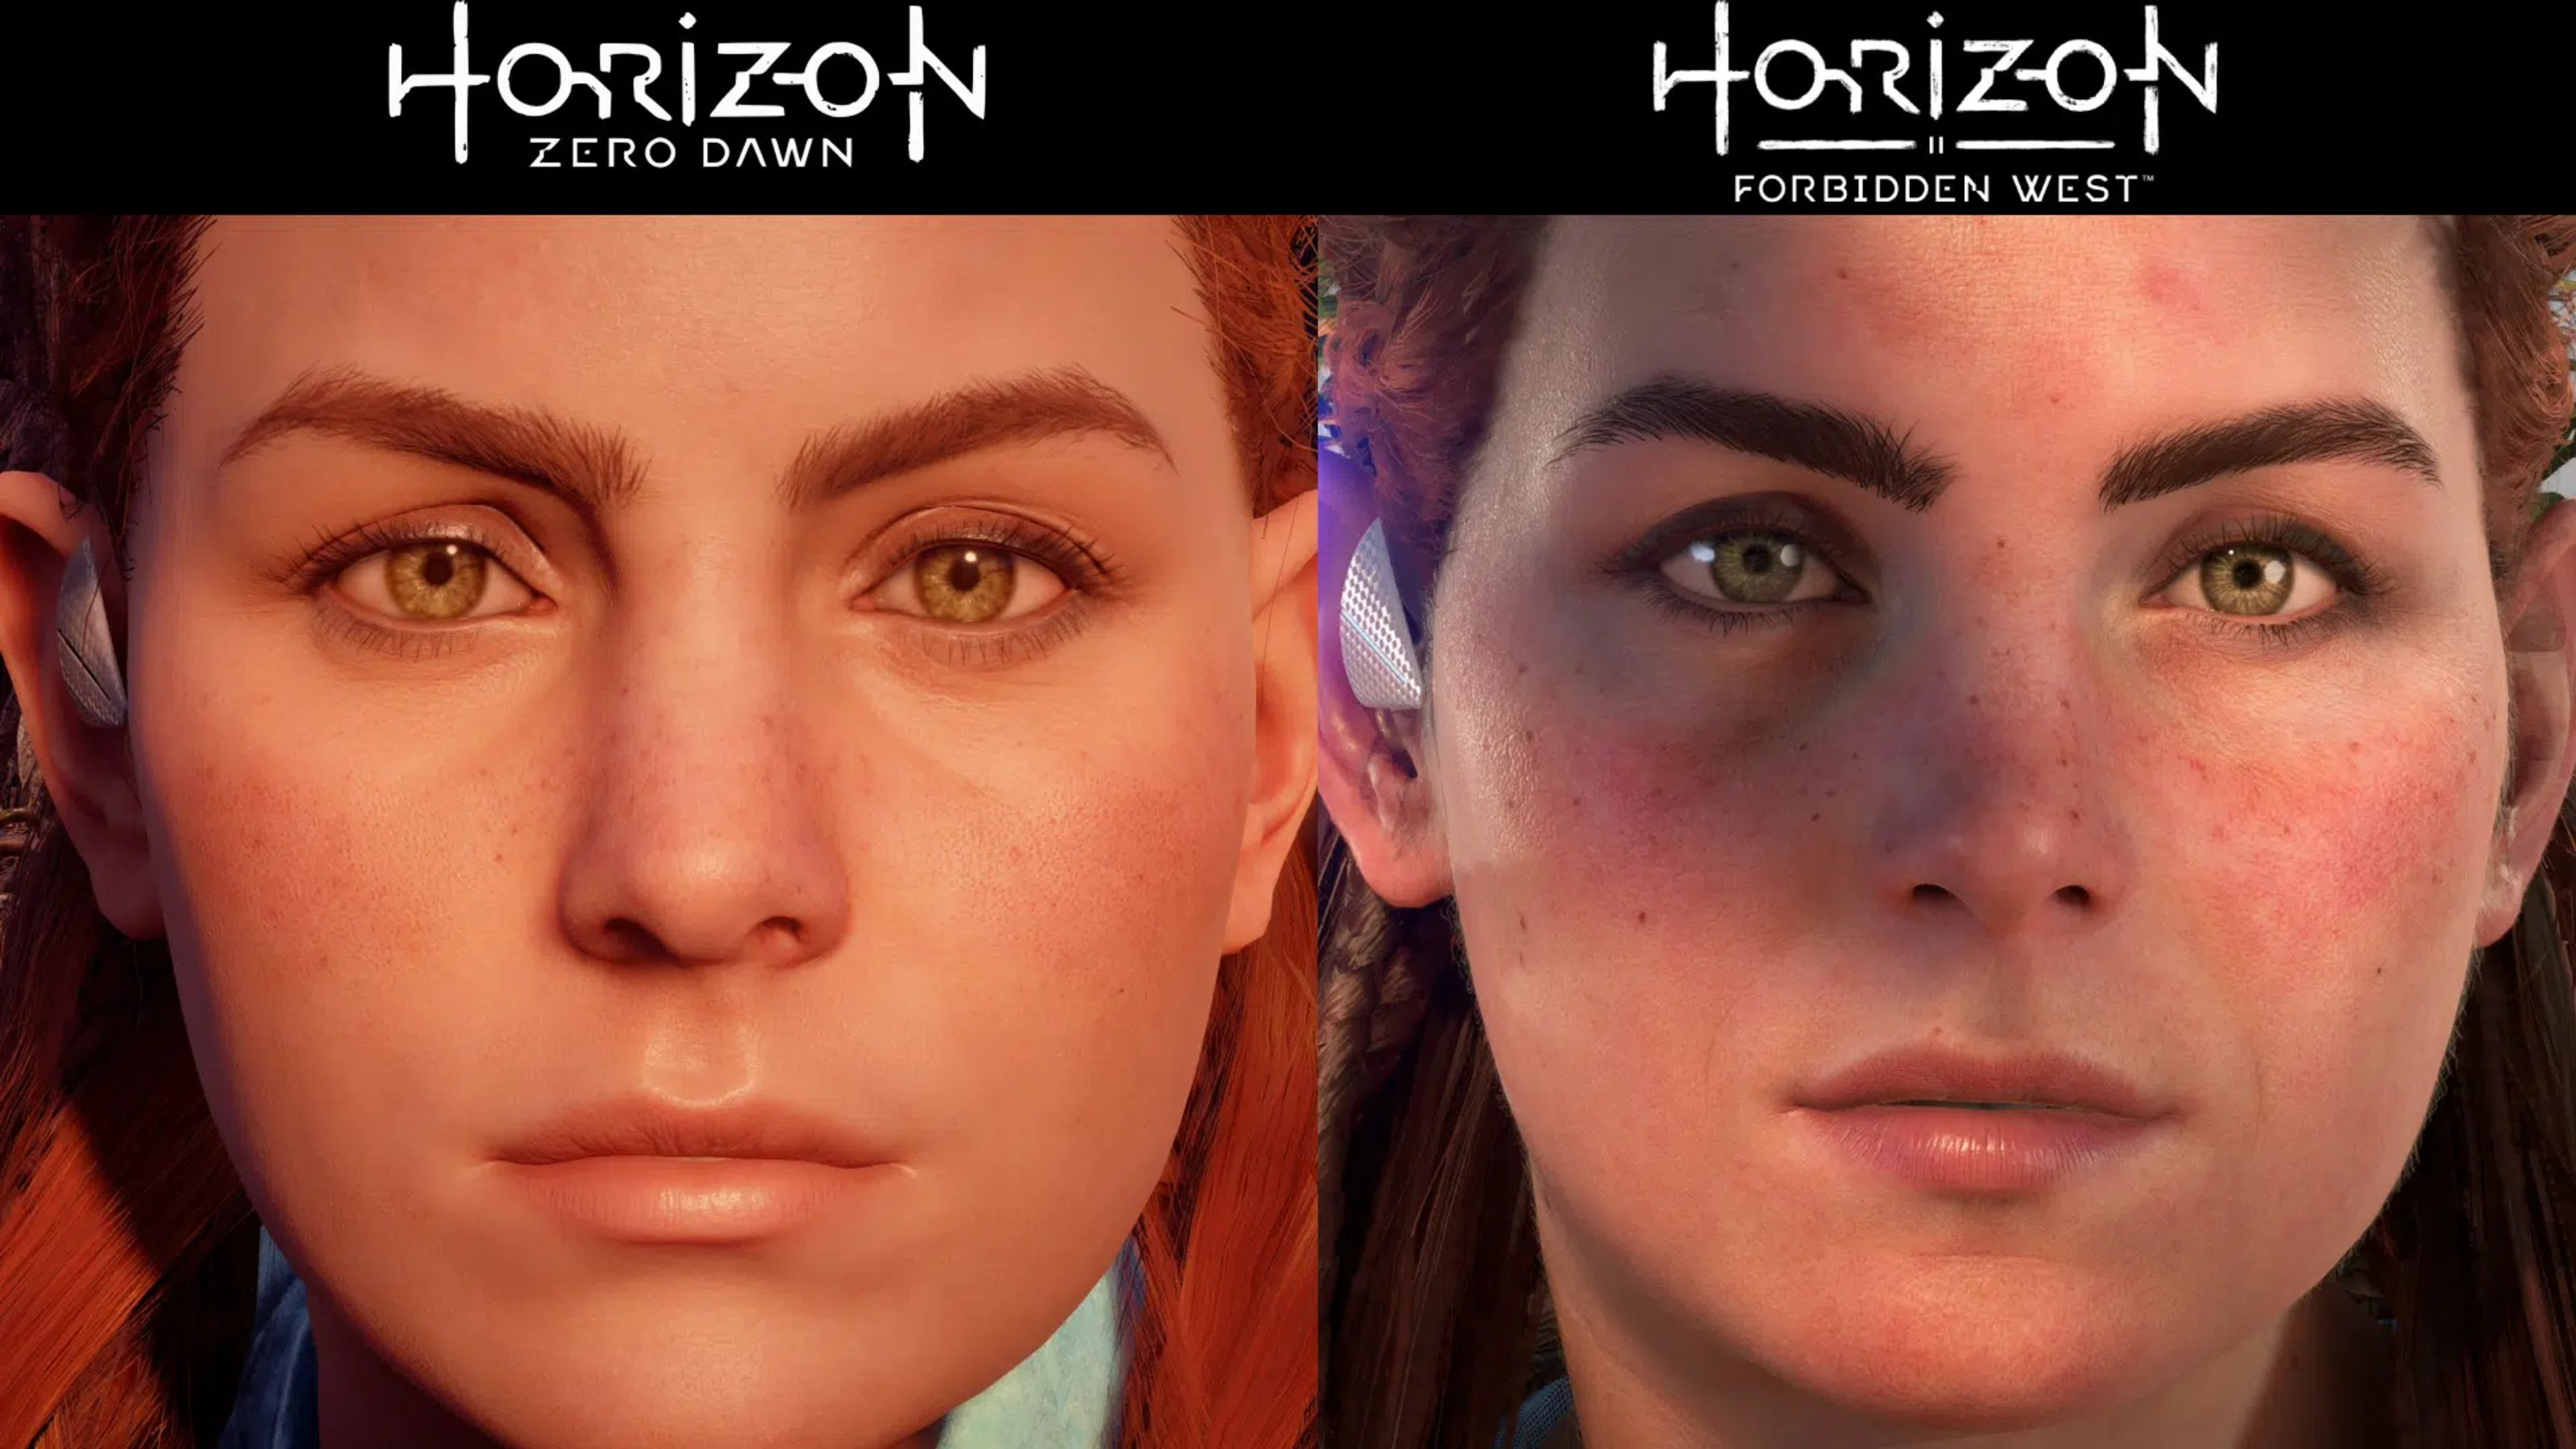 horizon-forbidden-west-vs-horizon-zero-dawn-comparison-1